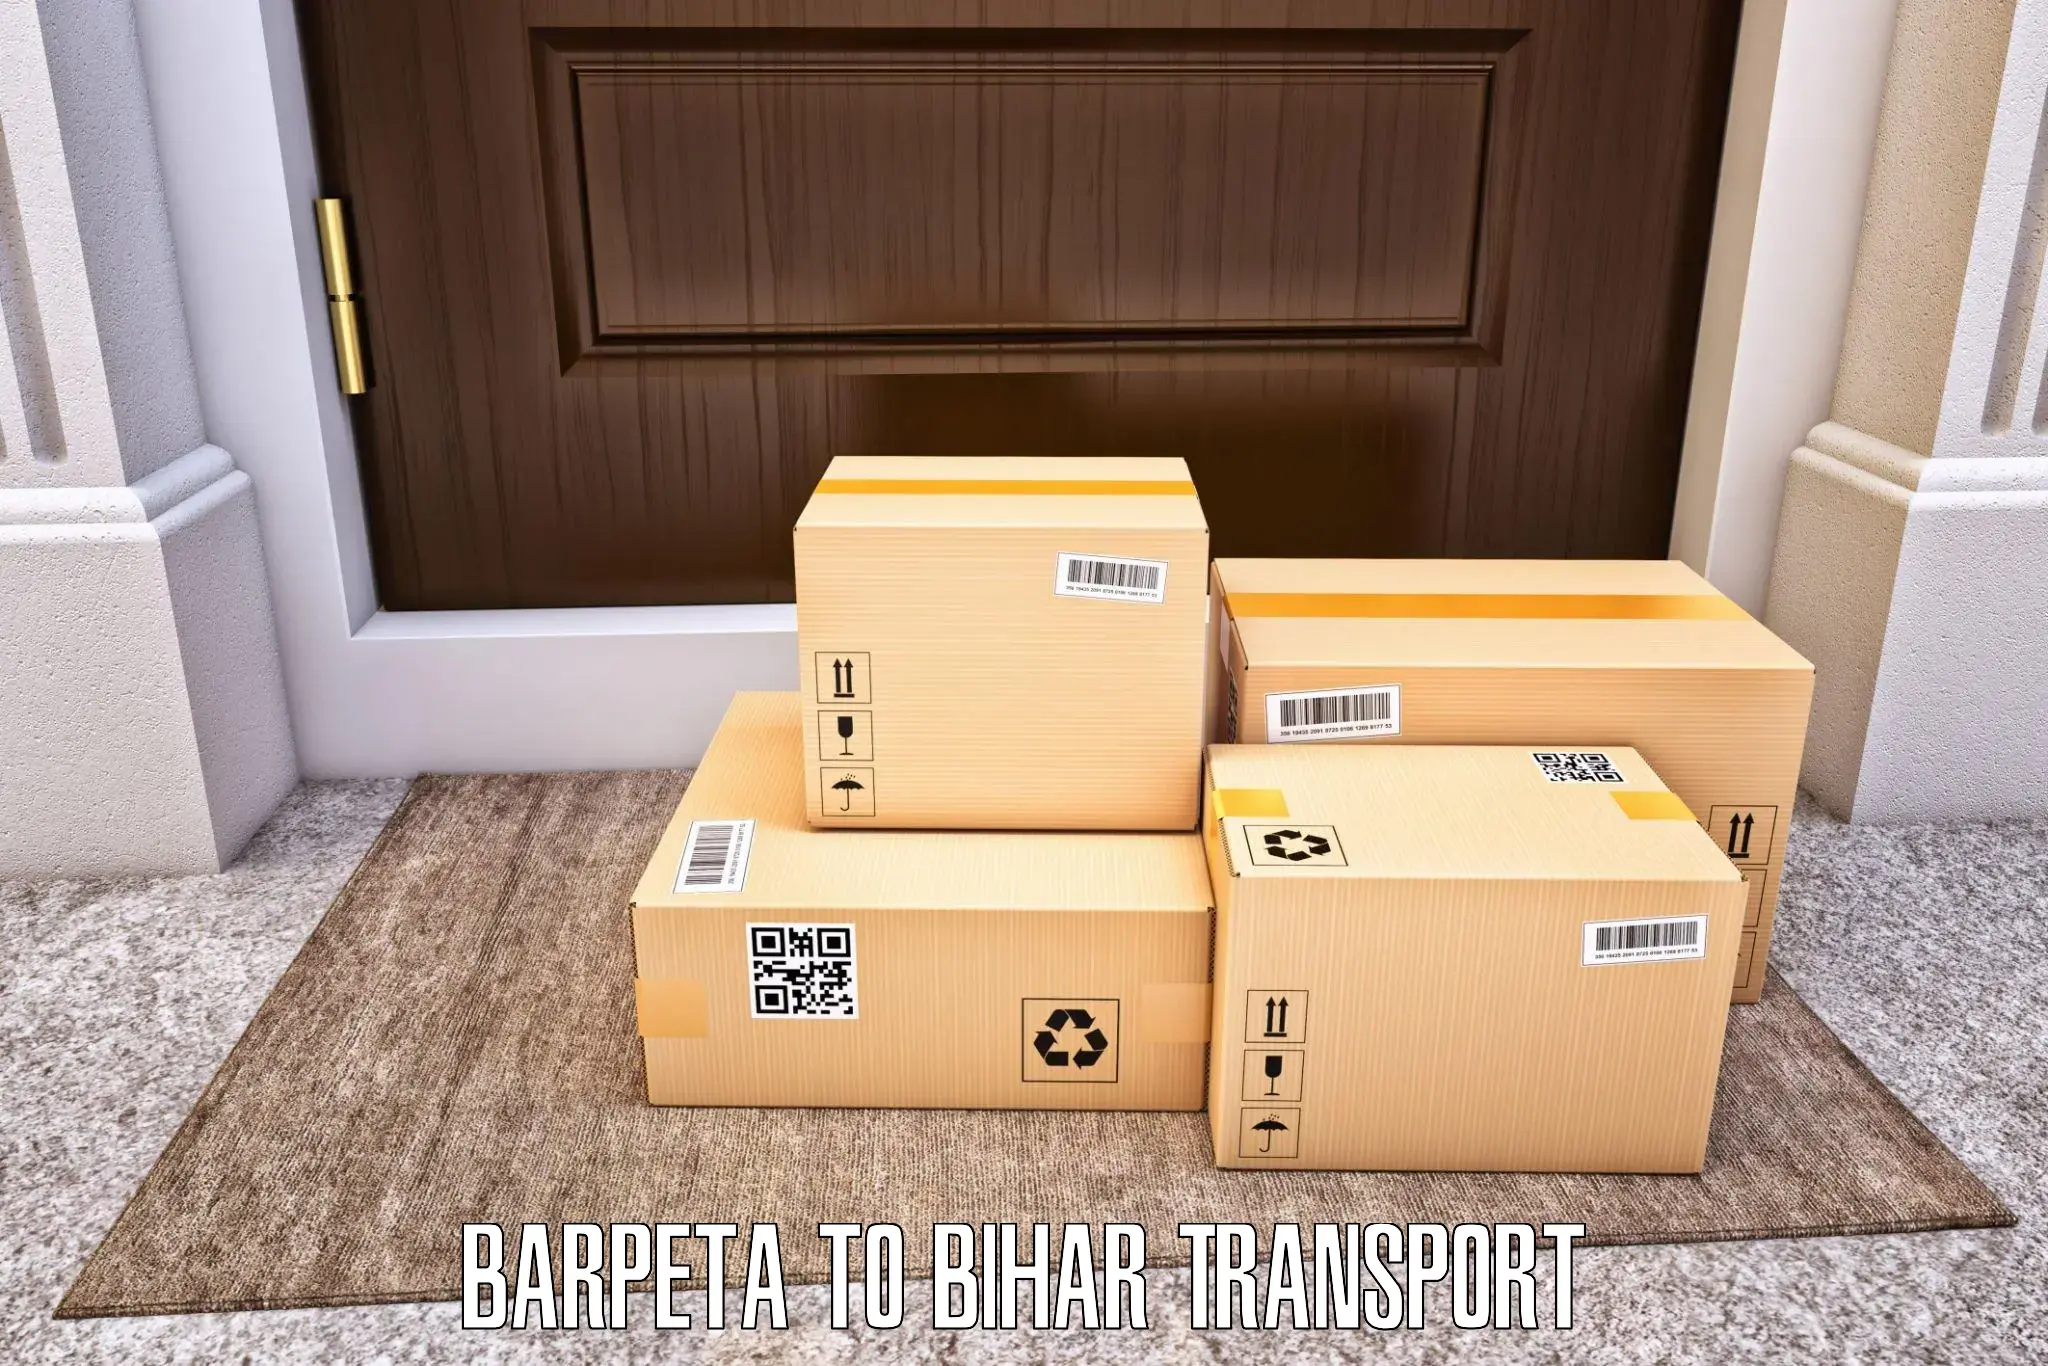 Vehicle transport services Barpeta to Bihar